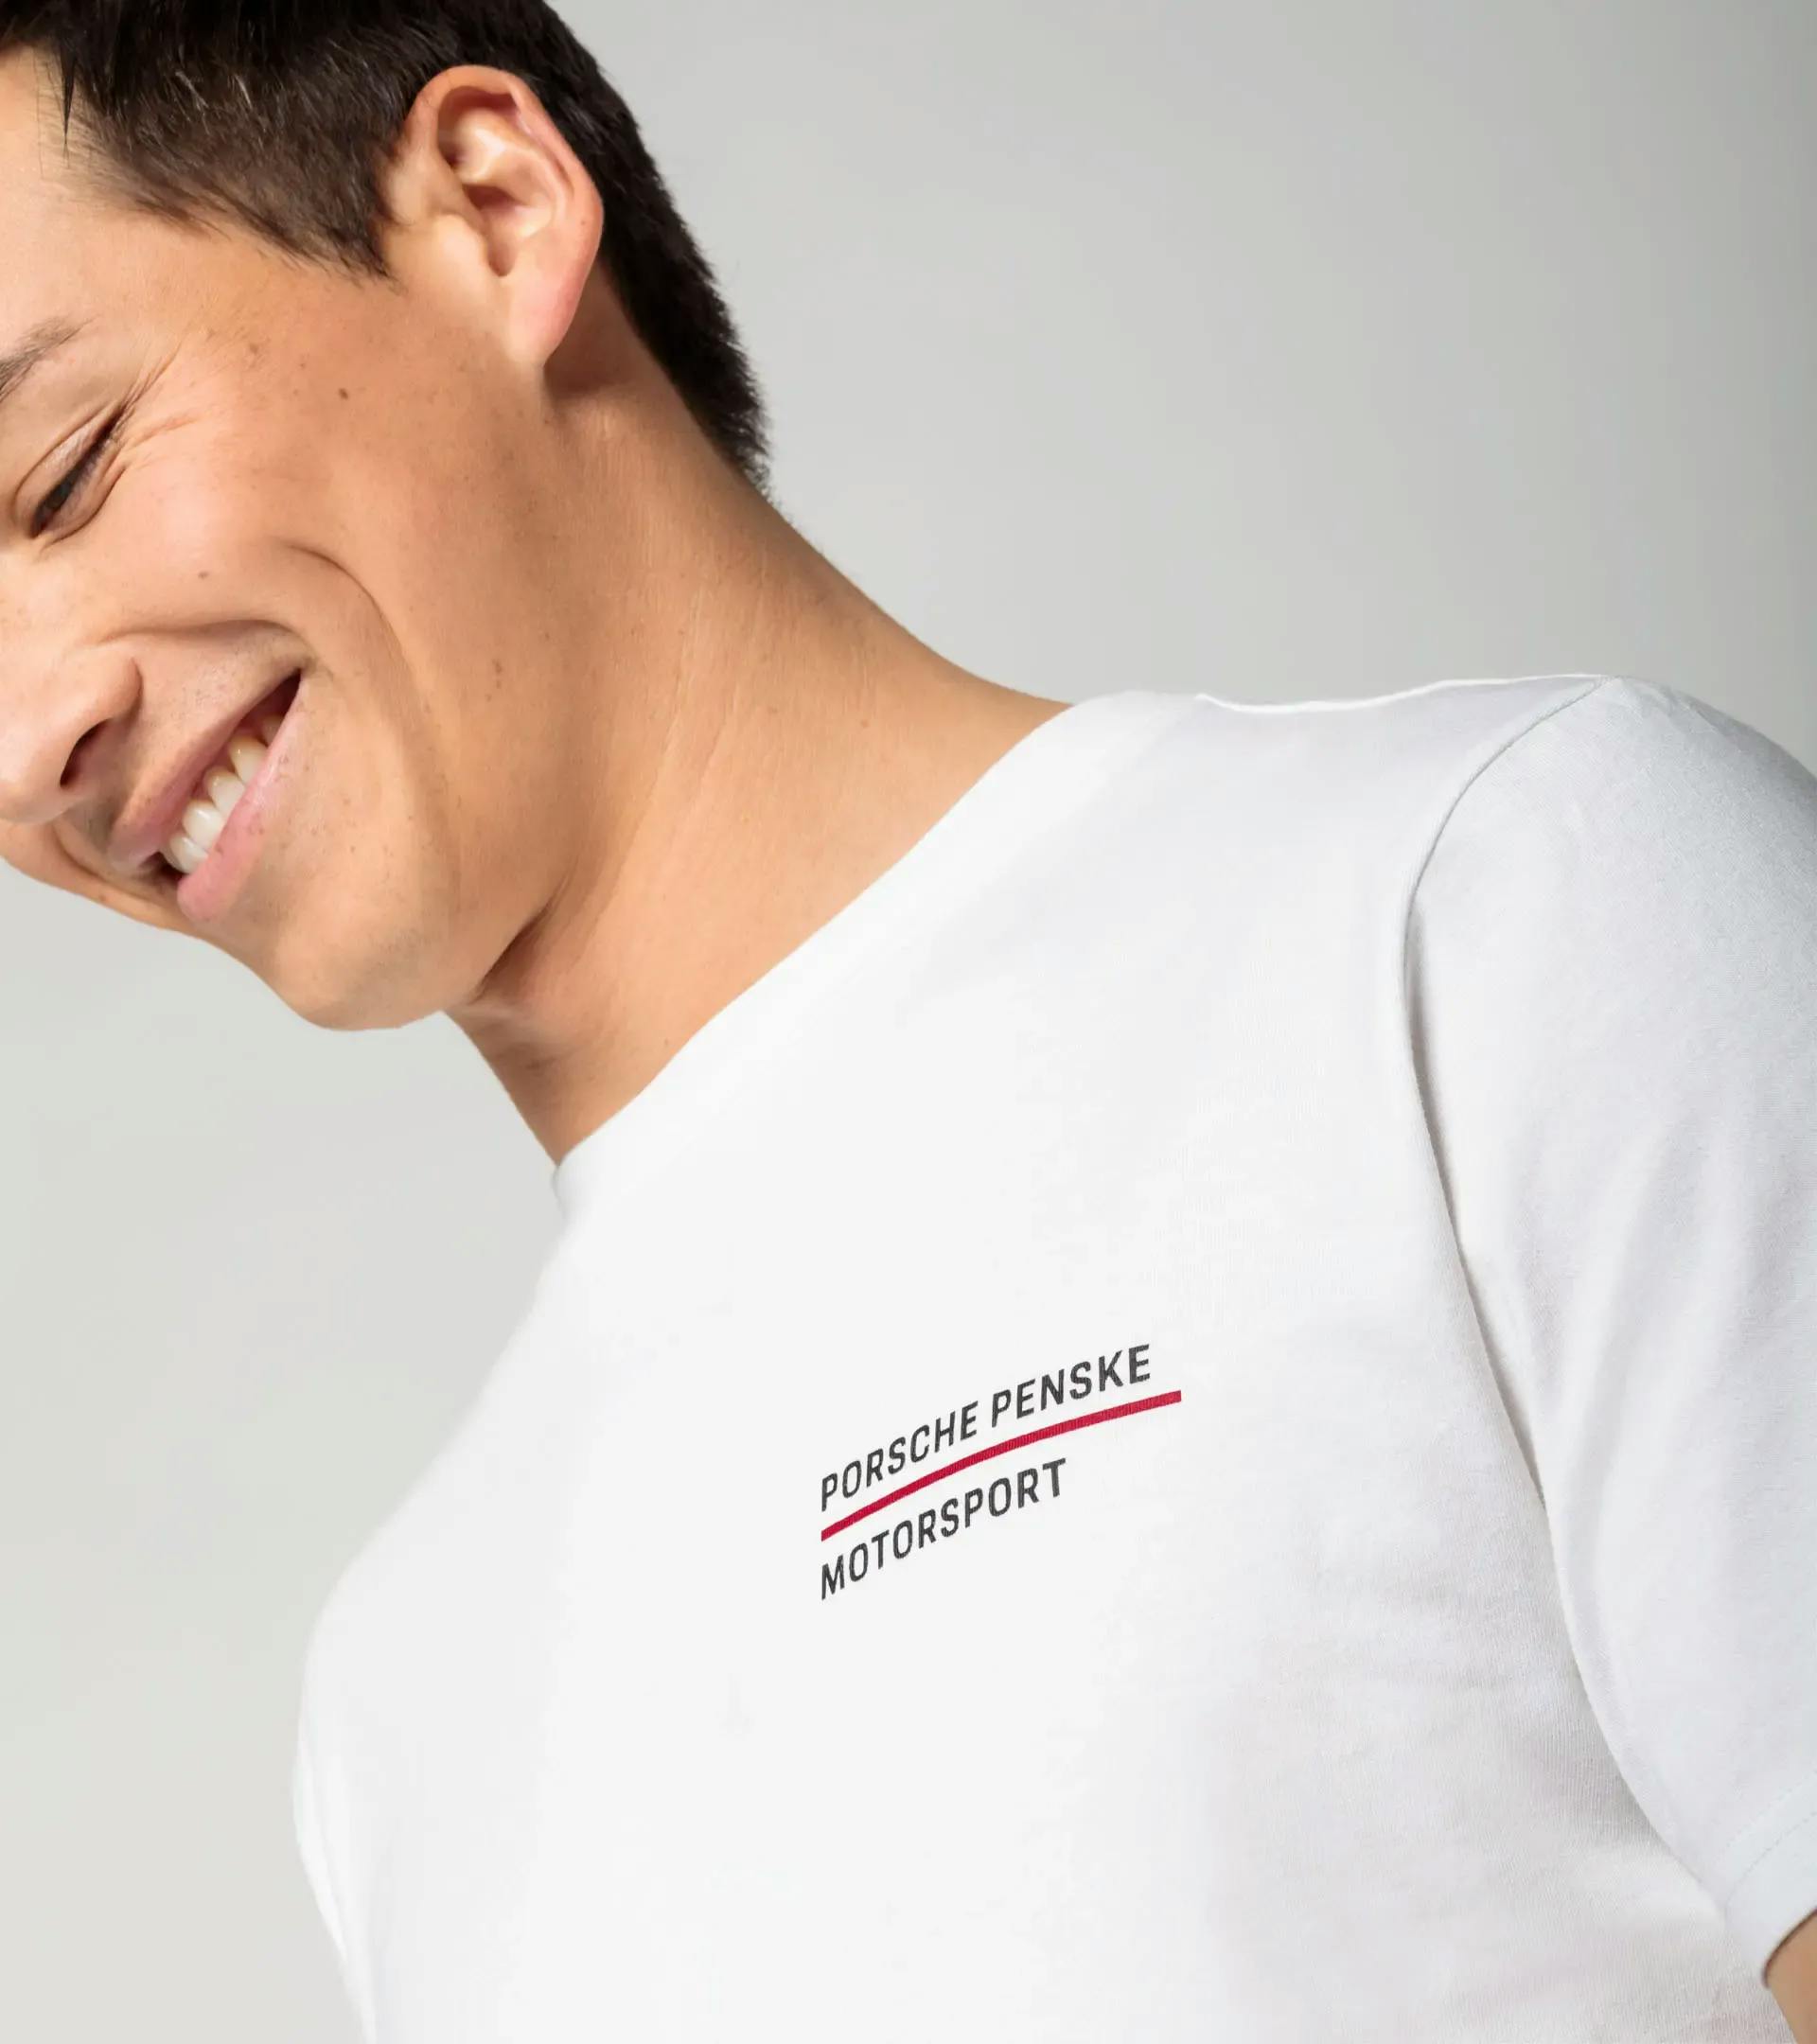 Penske Team Graphic T-shirt - Porsche Motorsport